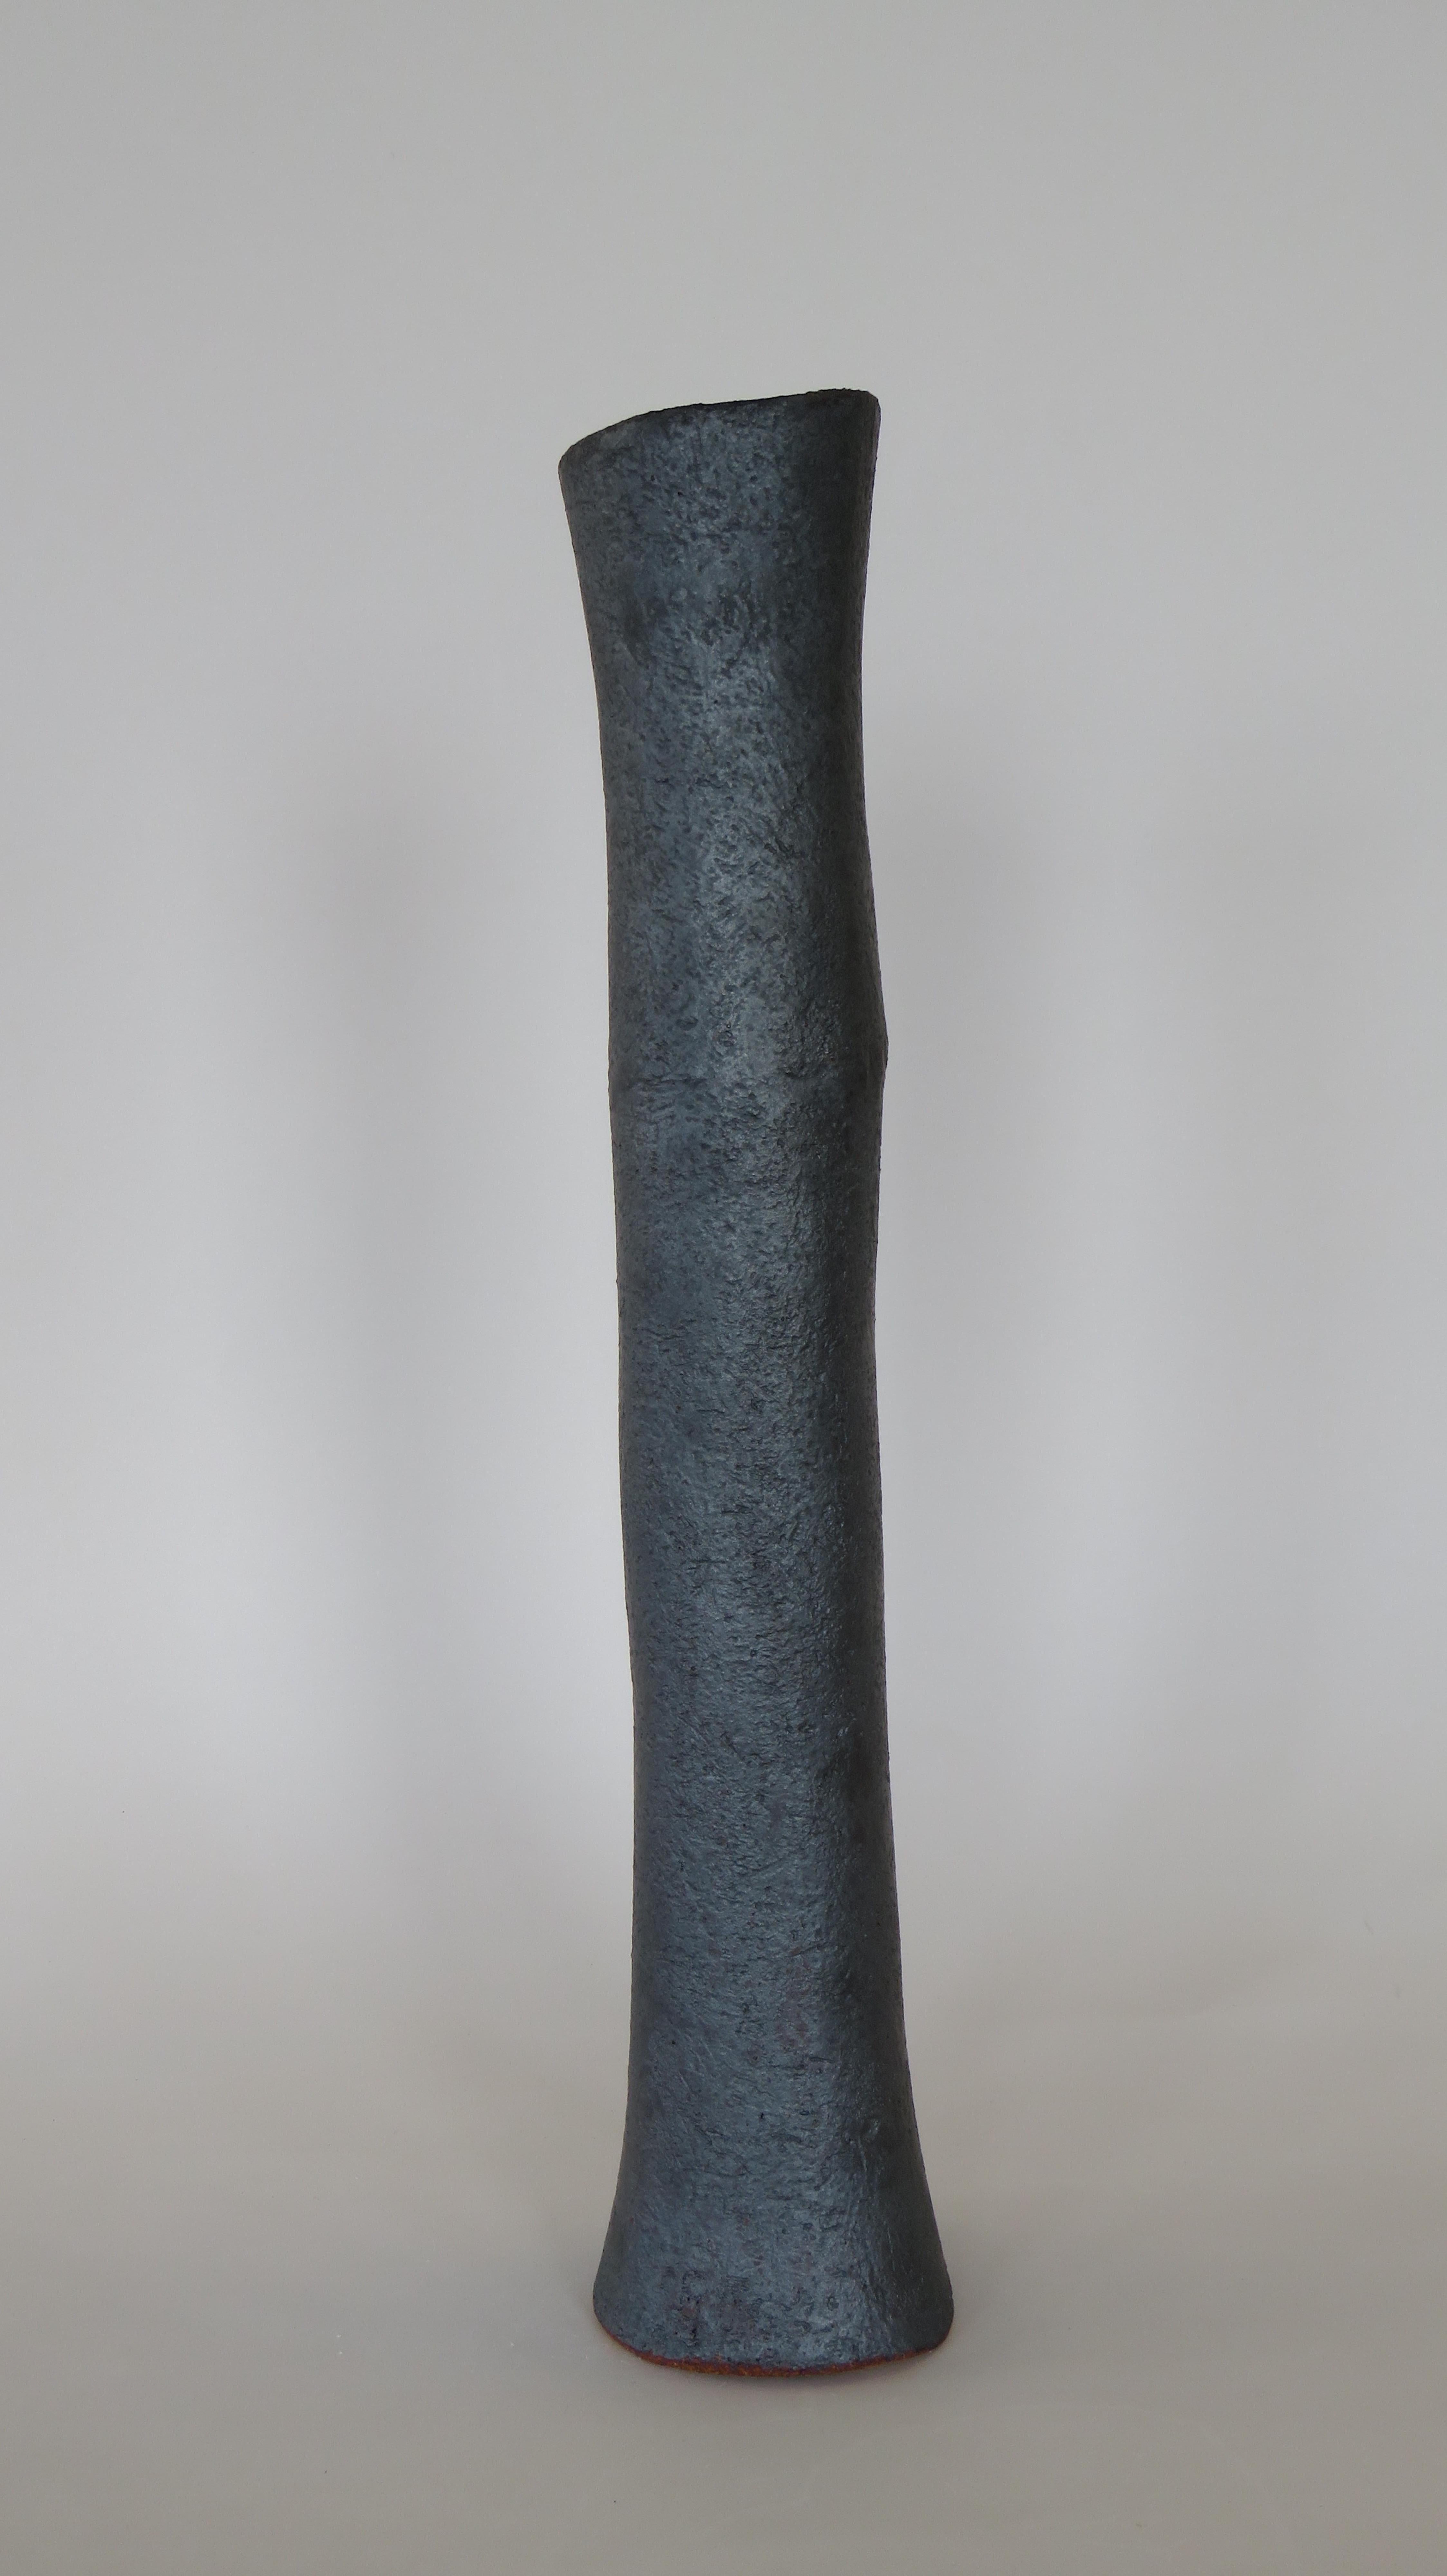 Tall, Tubular Metallic Black Ceramic Stoneware Vase, Hand Built 19 Inches Tall (Organische Moderne)